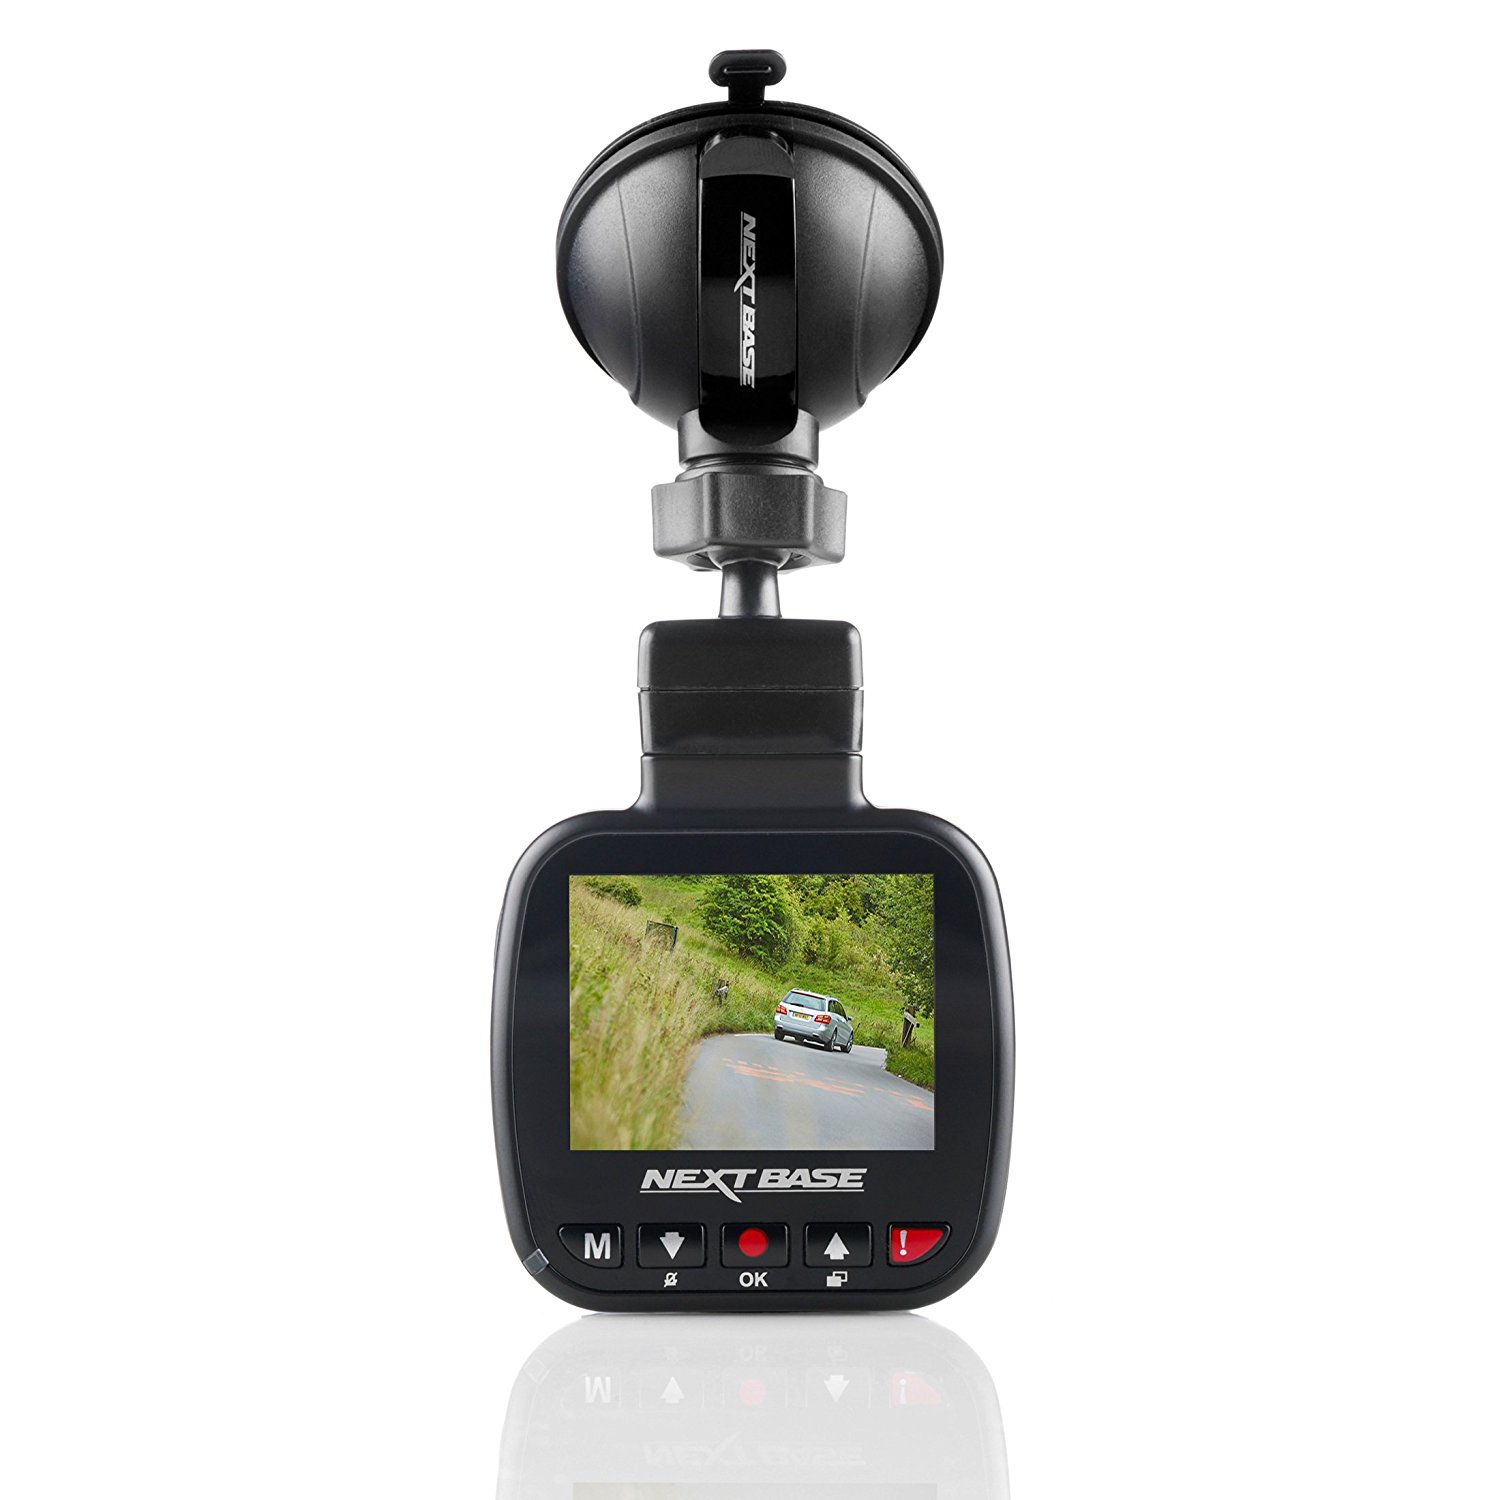 Nextbase 112 720p HD In-Car Dash Camera Dashboard Digital Driving Video Recorder - Black 4